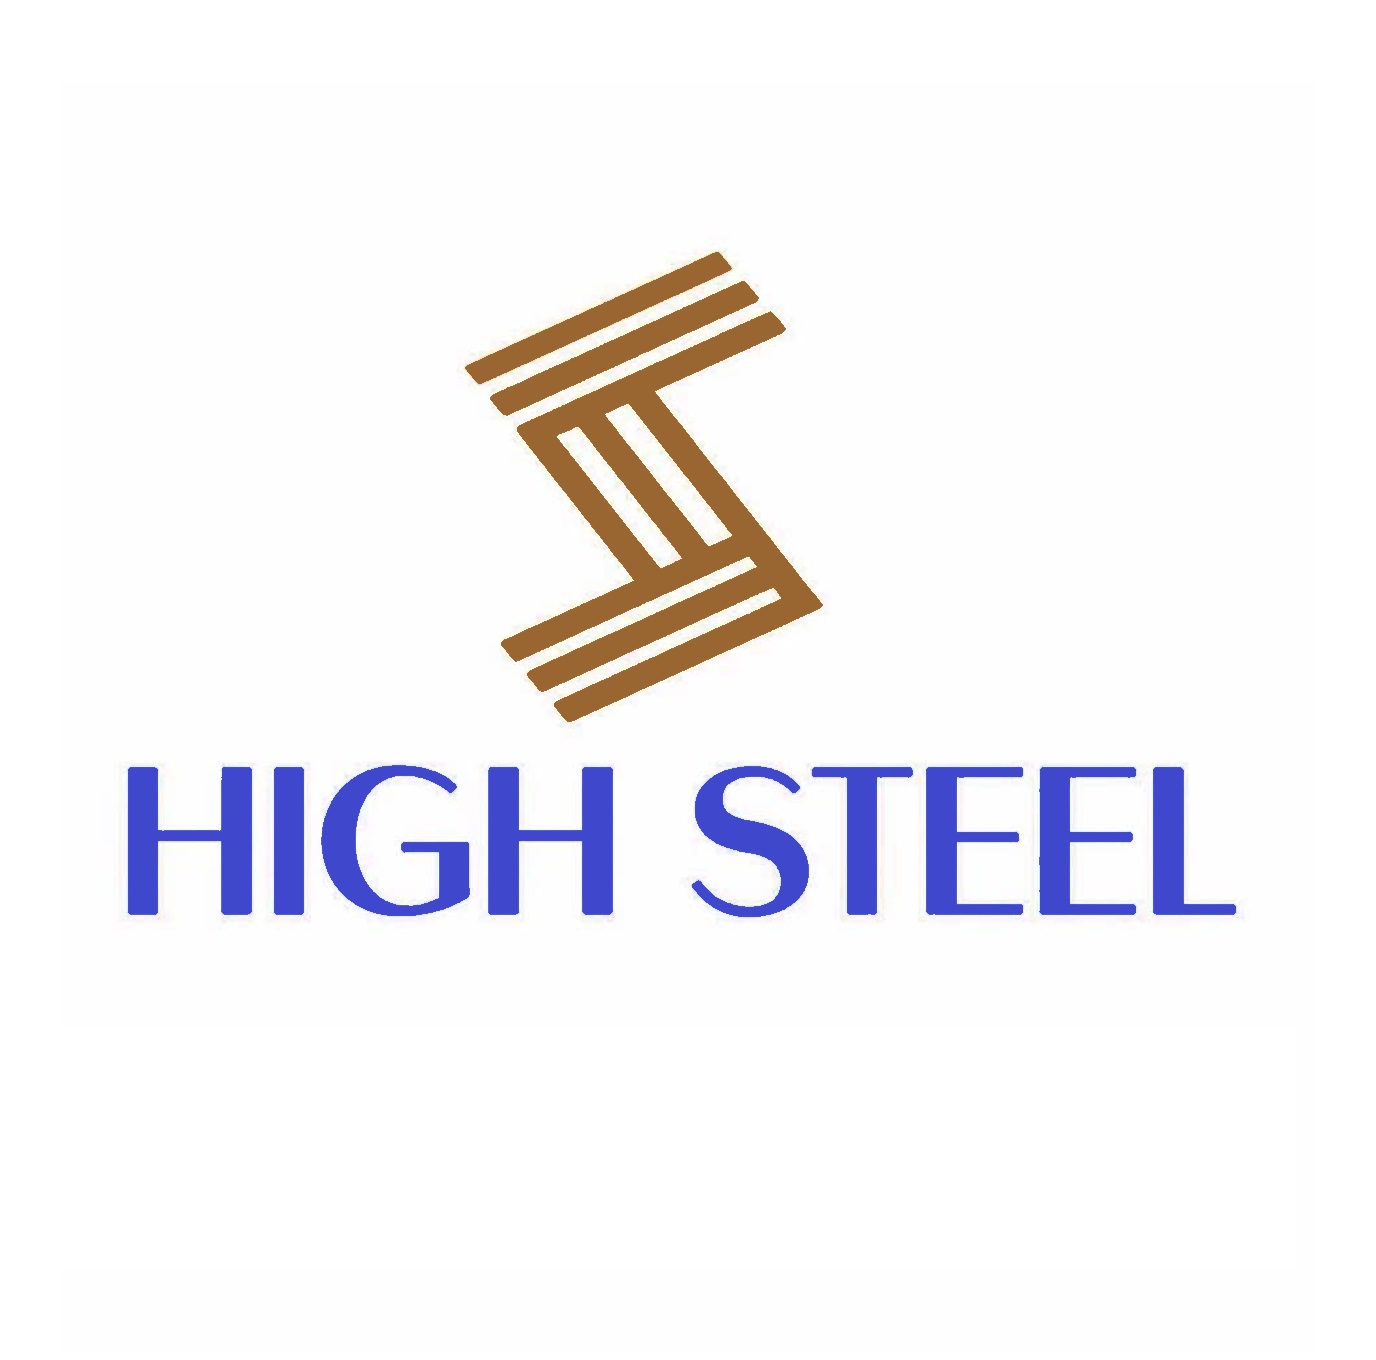 High Steel copper